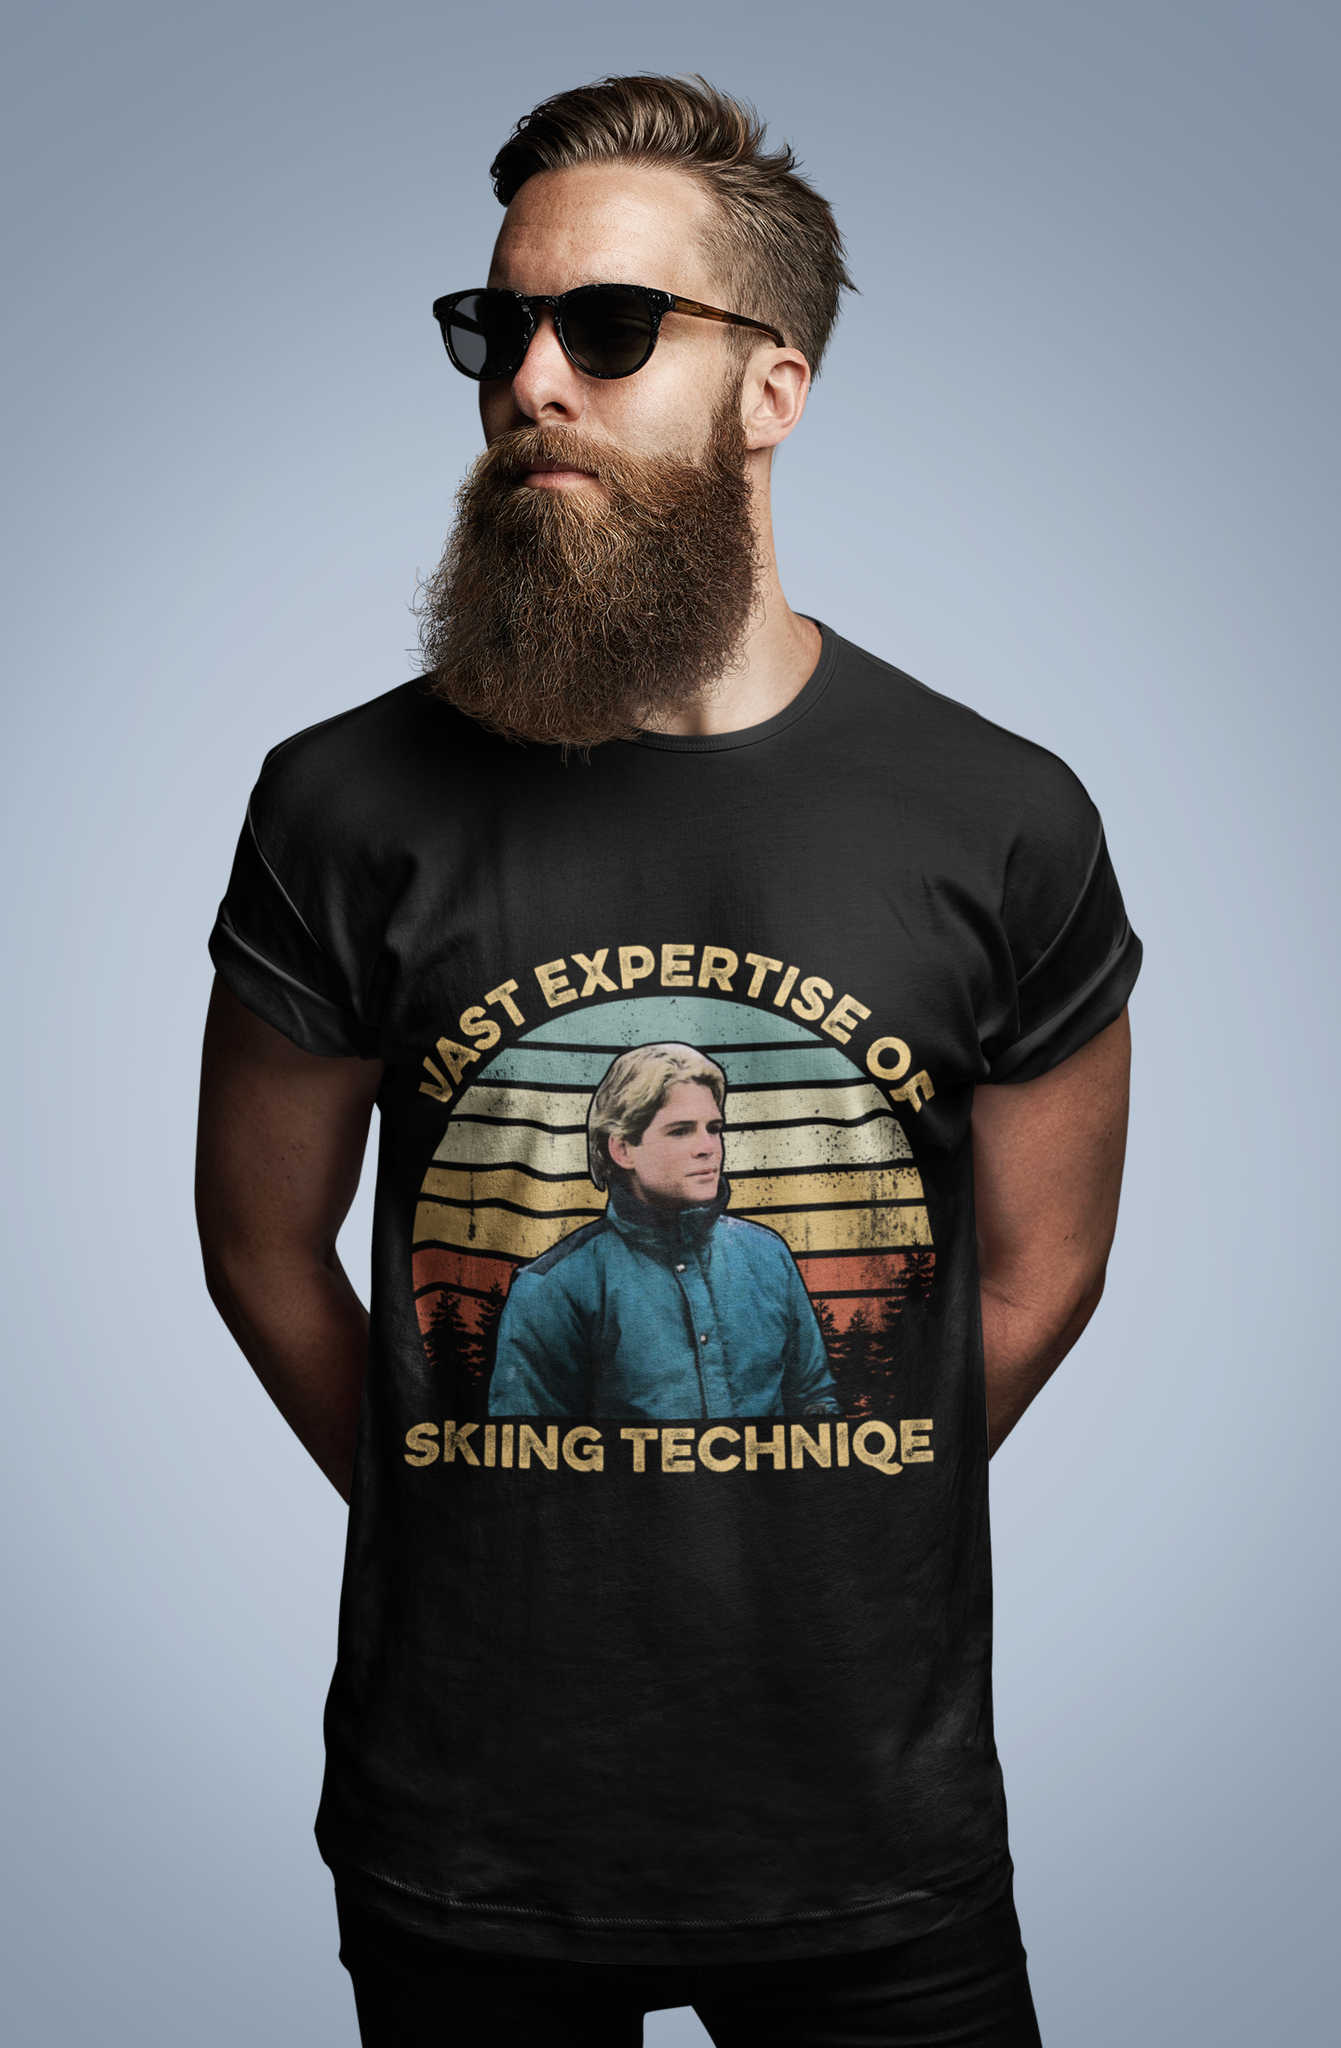 Better Off Dead Comedy Film T Shirt, Roy Stalin T Shirt, Vast Expertise Of Skiing Technique Tshirt